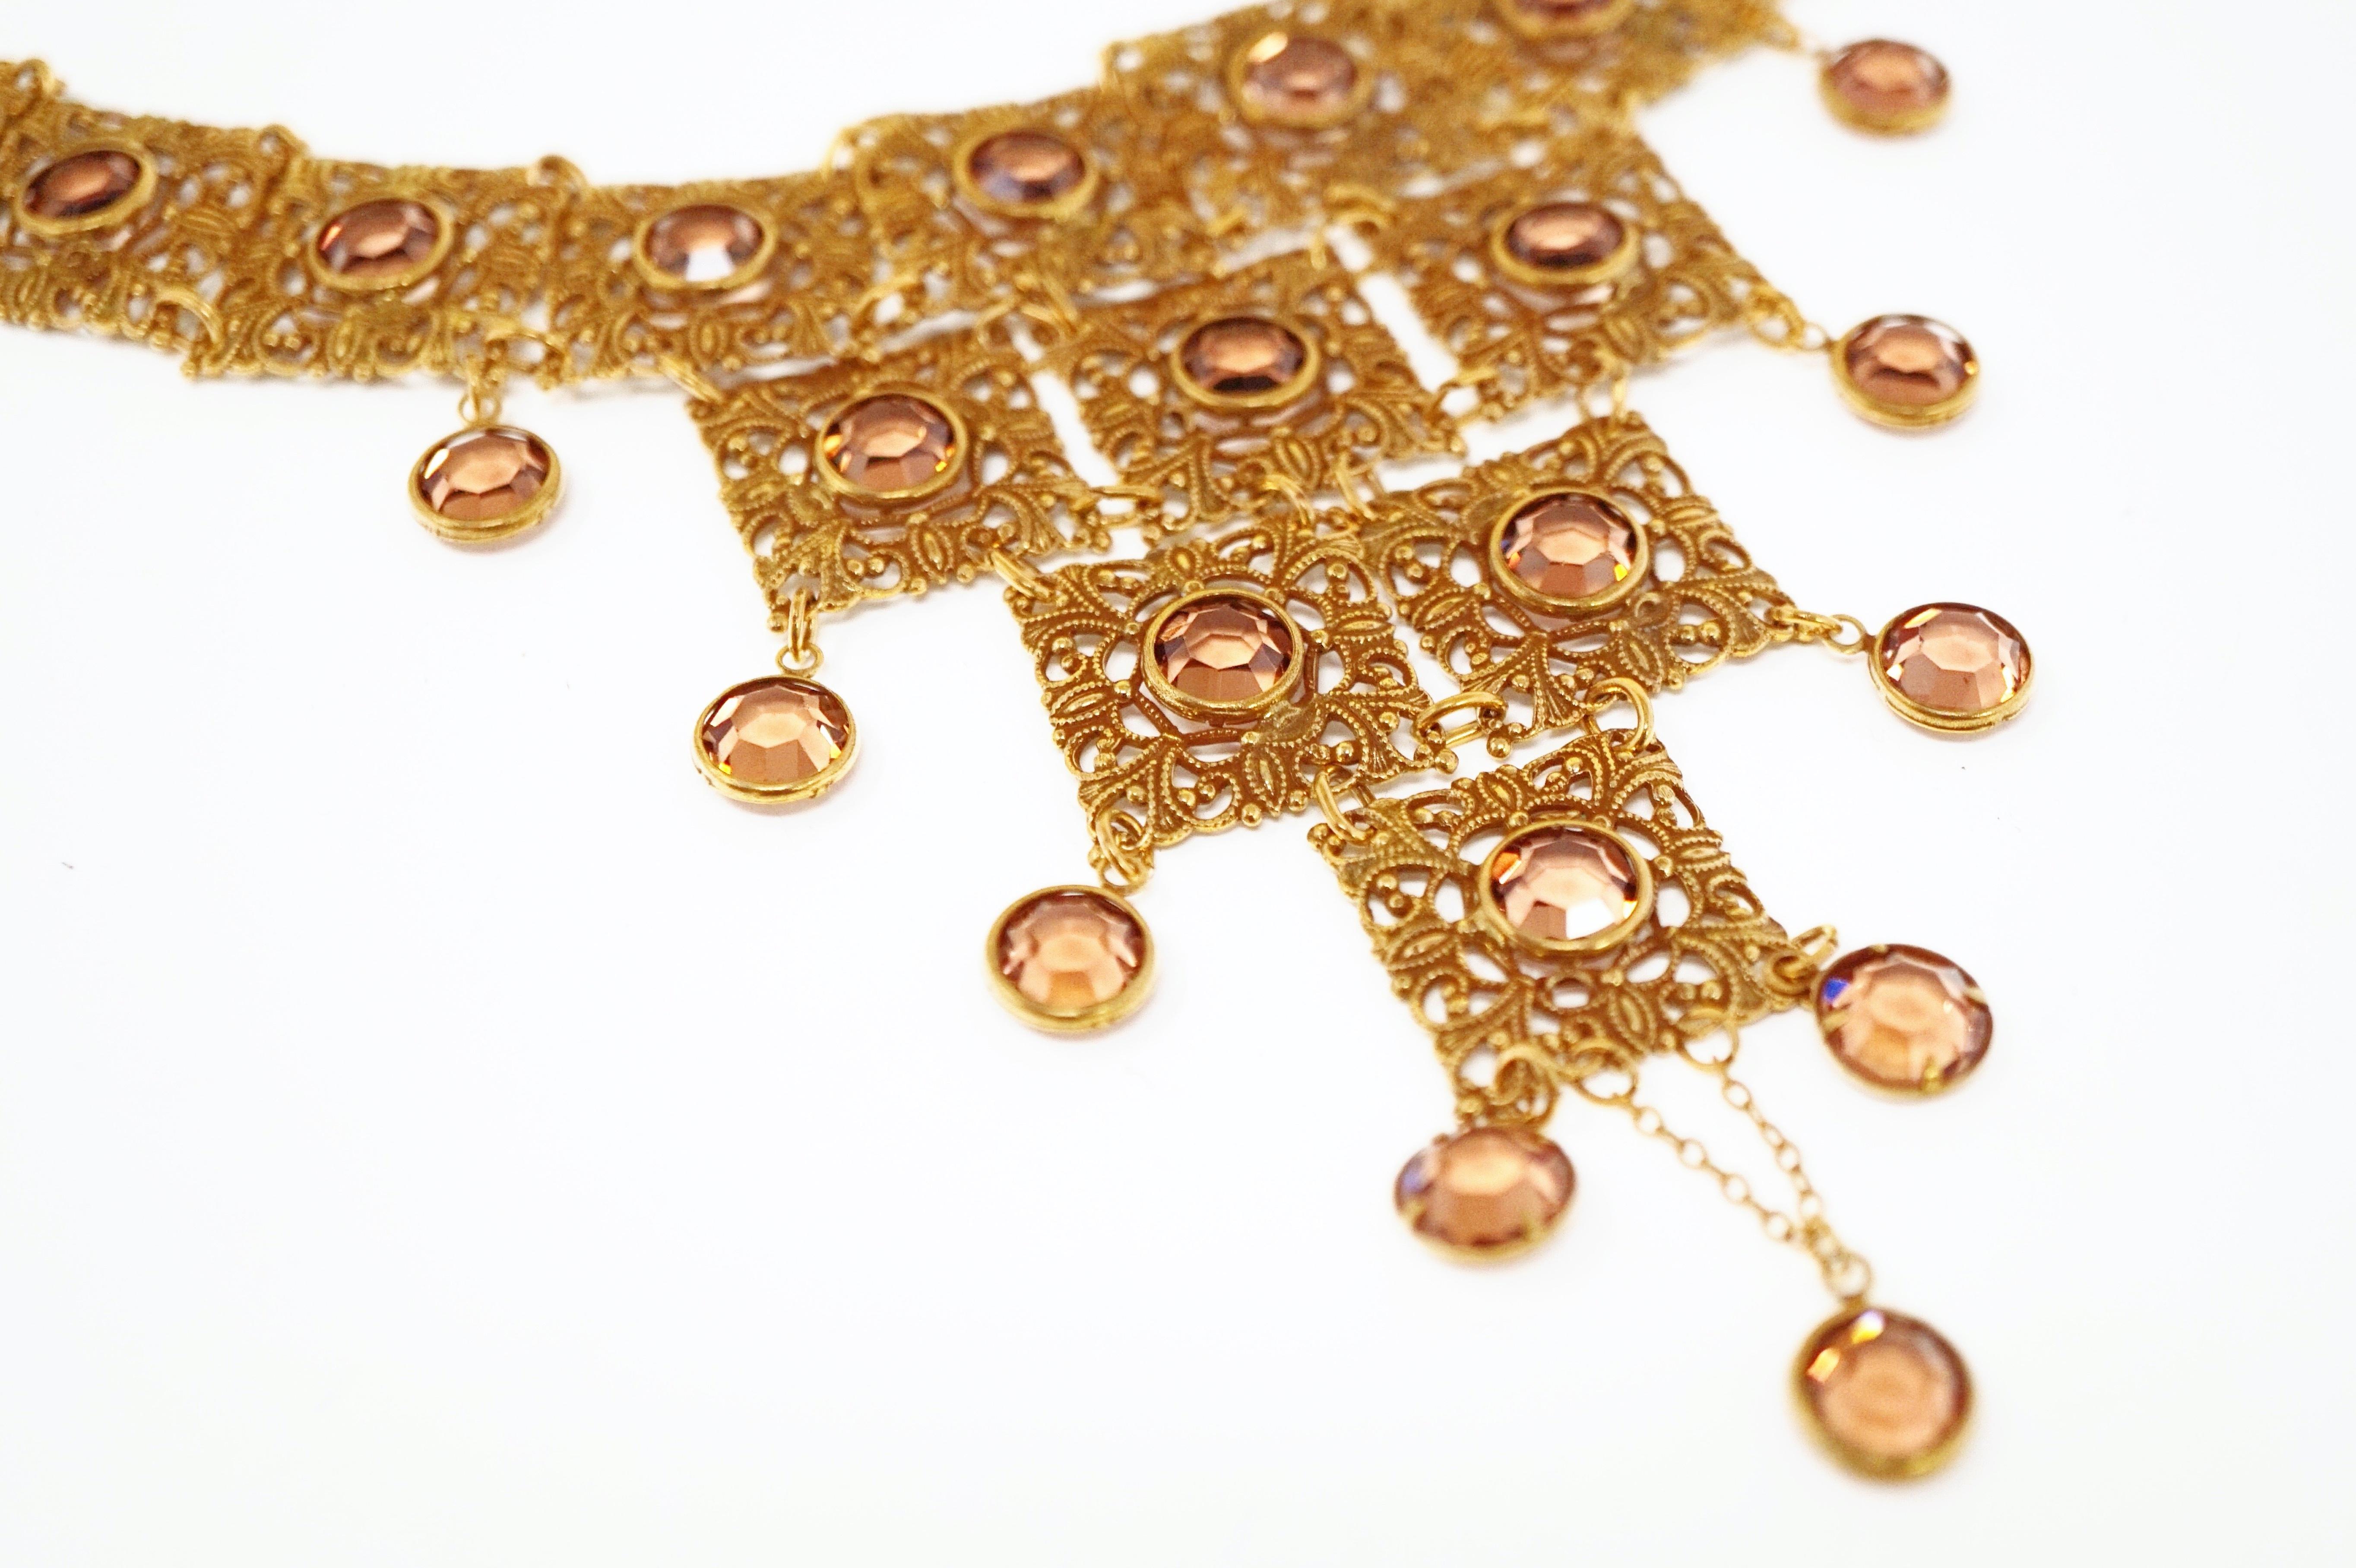 Women's Vintage Goldette Etruscan Revival Bib Necklace with Topaz Crystals, 1970s